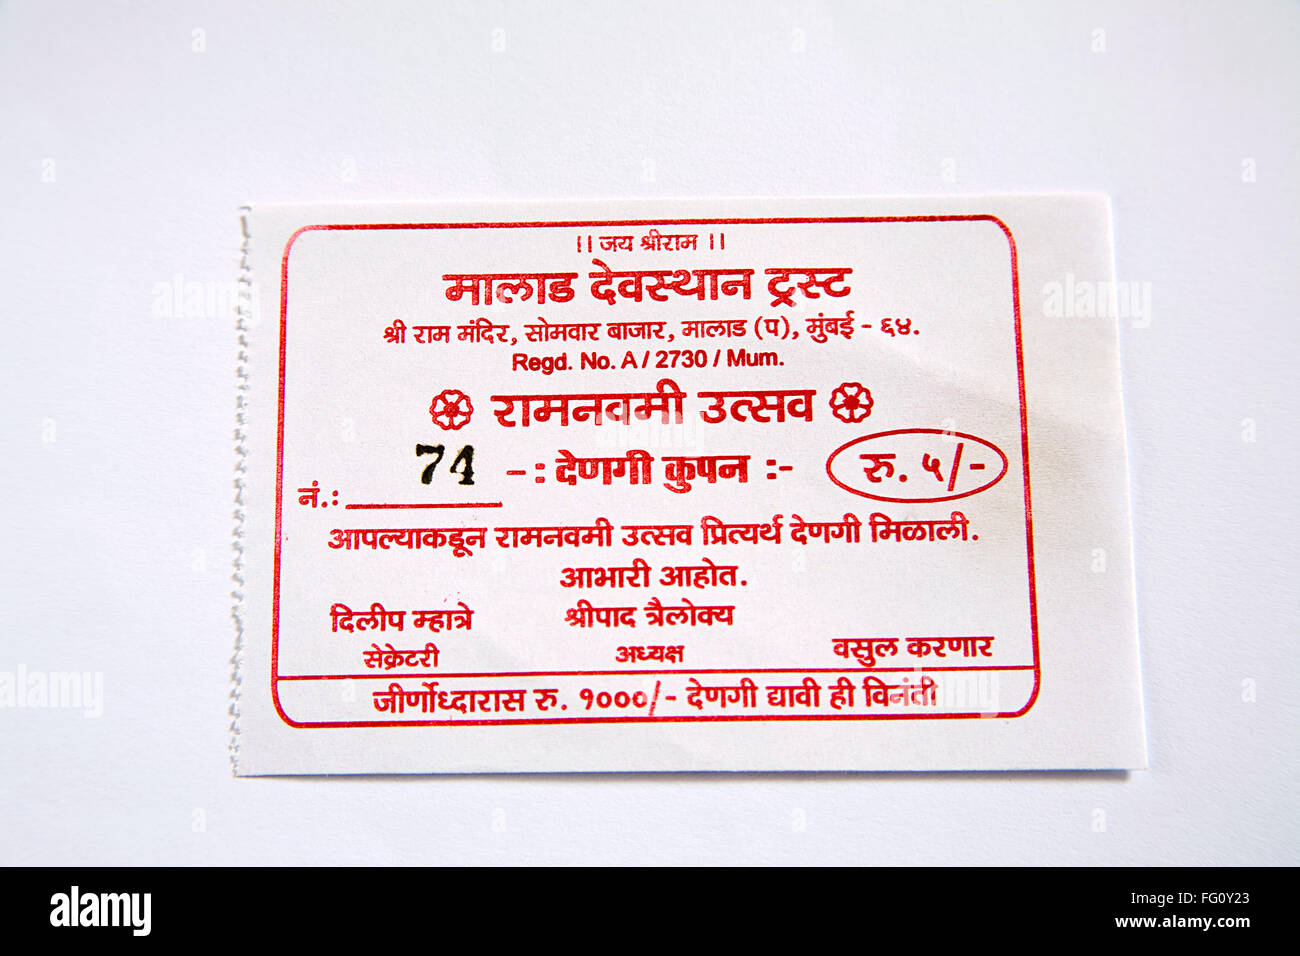 Donation coupon mumbai Maharashtra india april 2011 Stock Photo